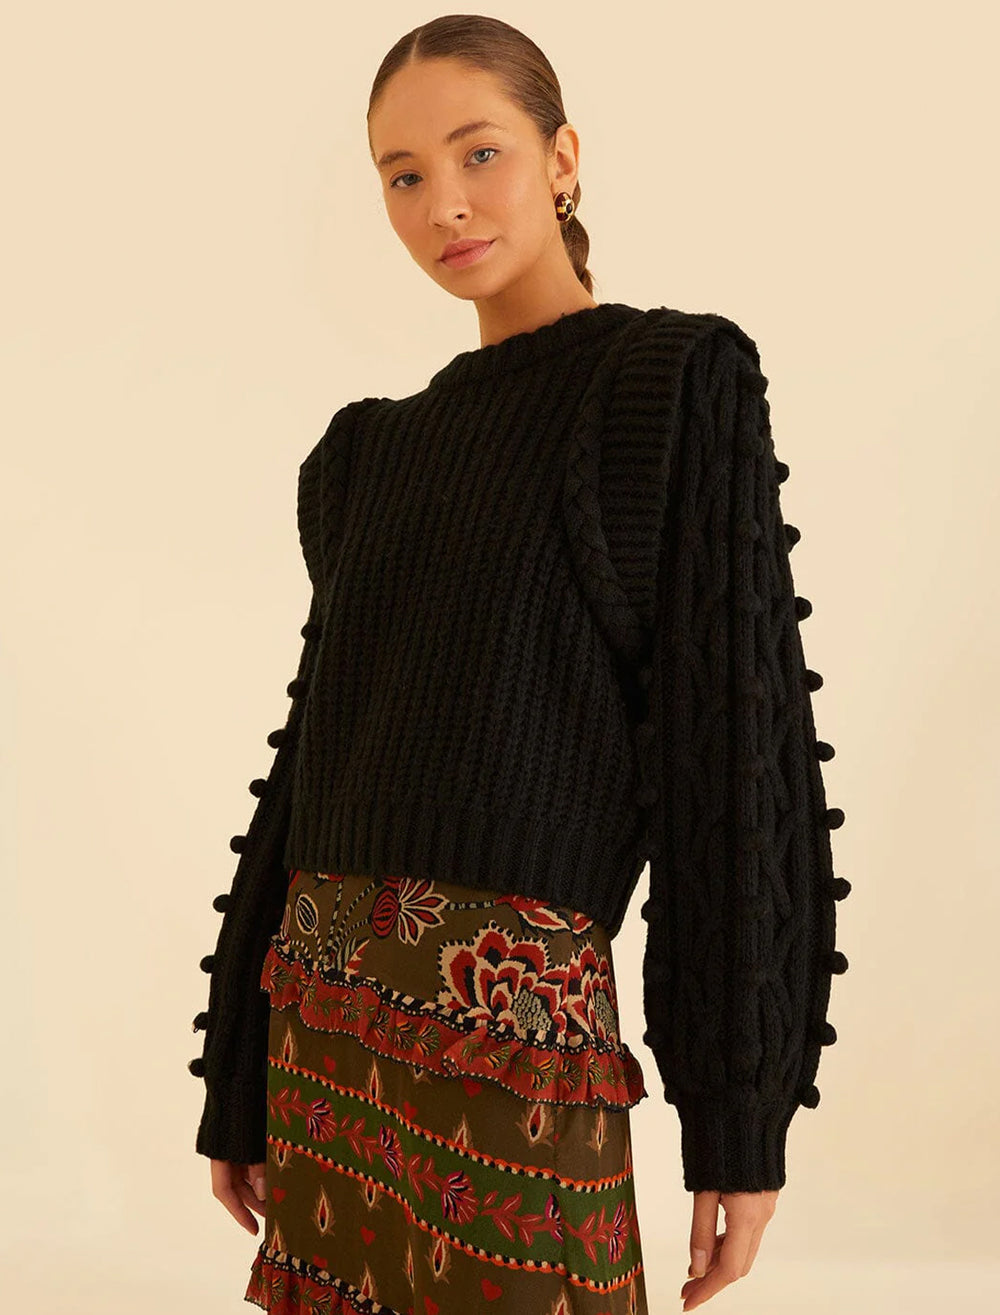 Model wearing FARM Rio's black braided sweater.